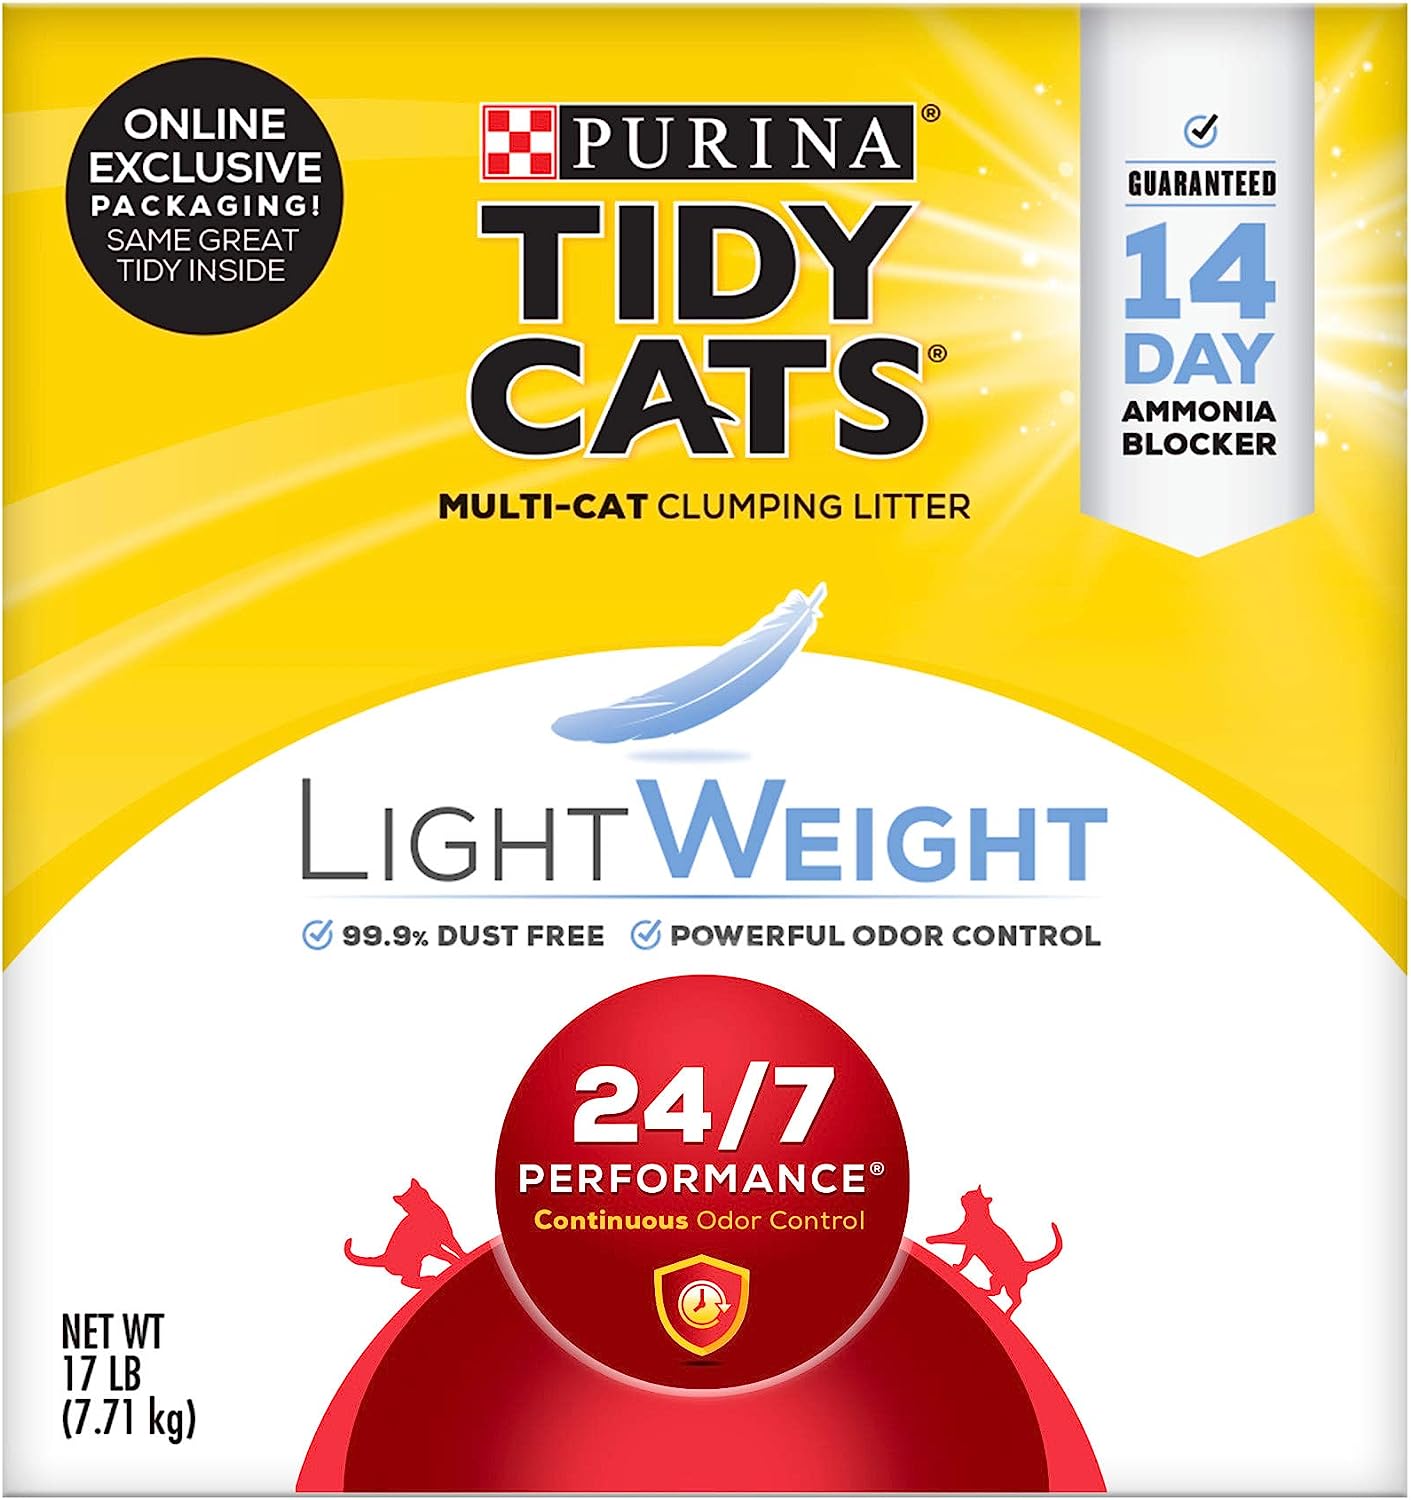 Purina Tidy Cats Lightweight Clumping Cat Litter - 24/7 Performance, Multi-Cat, 17lb Box